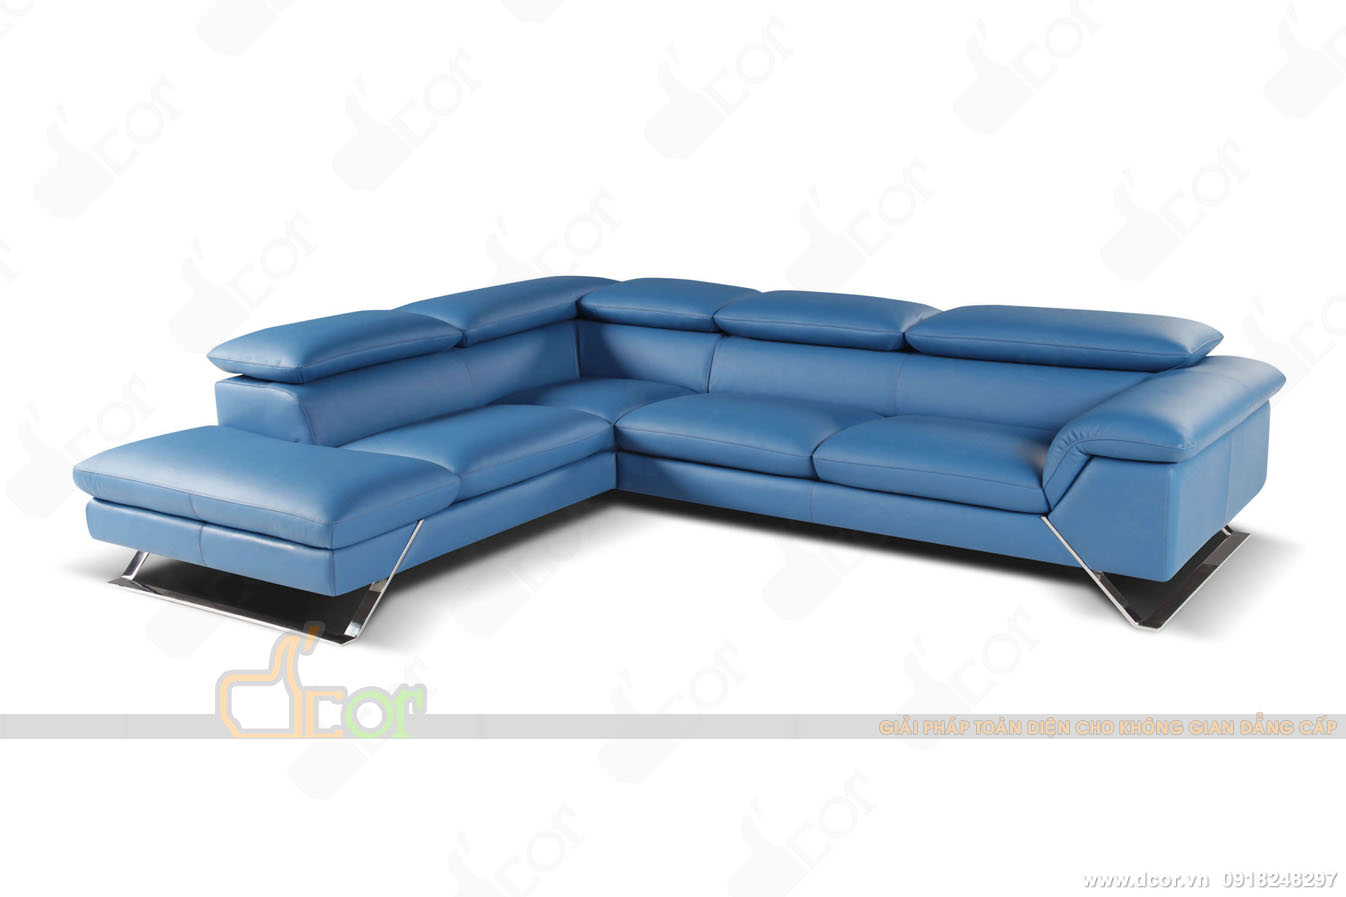 Mẫu sofa Italia màu sắc sang trọng cực kỳ bắt mắt Mã: DG1054 – ARTU.935 – Calia > 